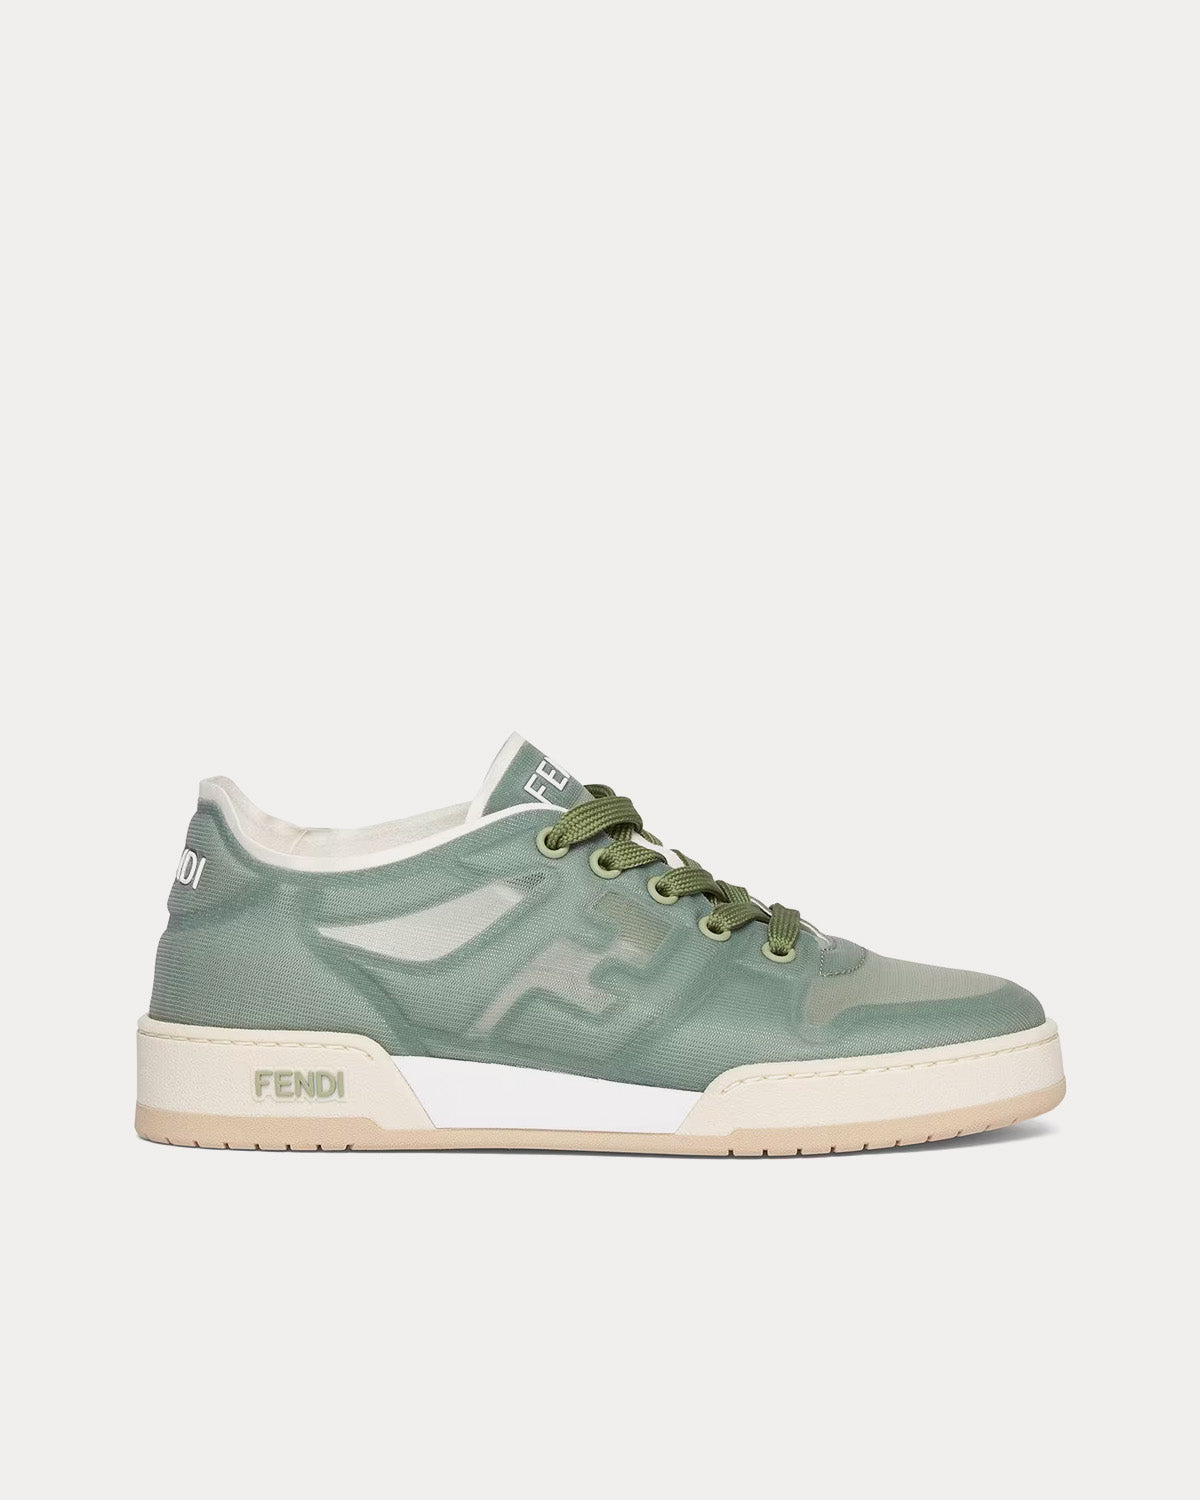 Fendi - Match Mesh Green Low Top Sneakers